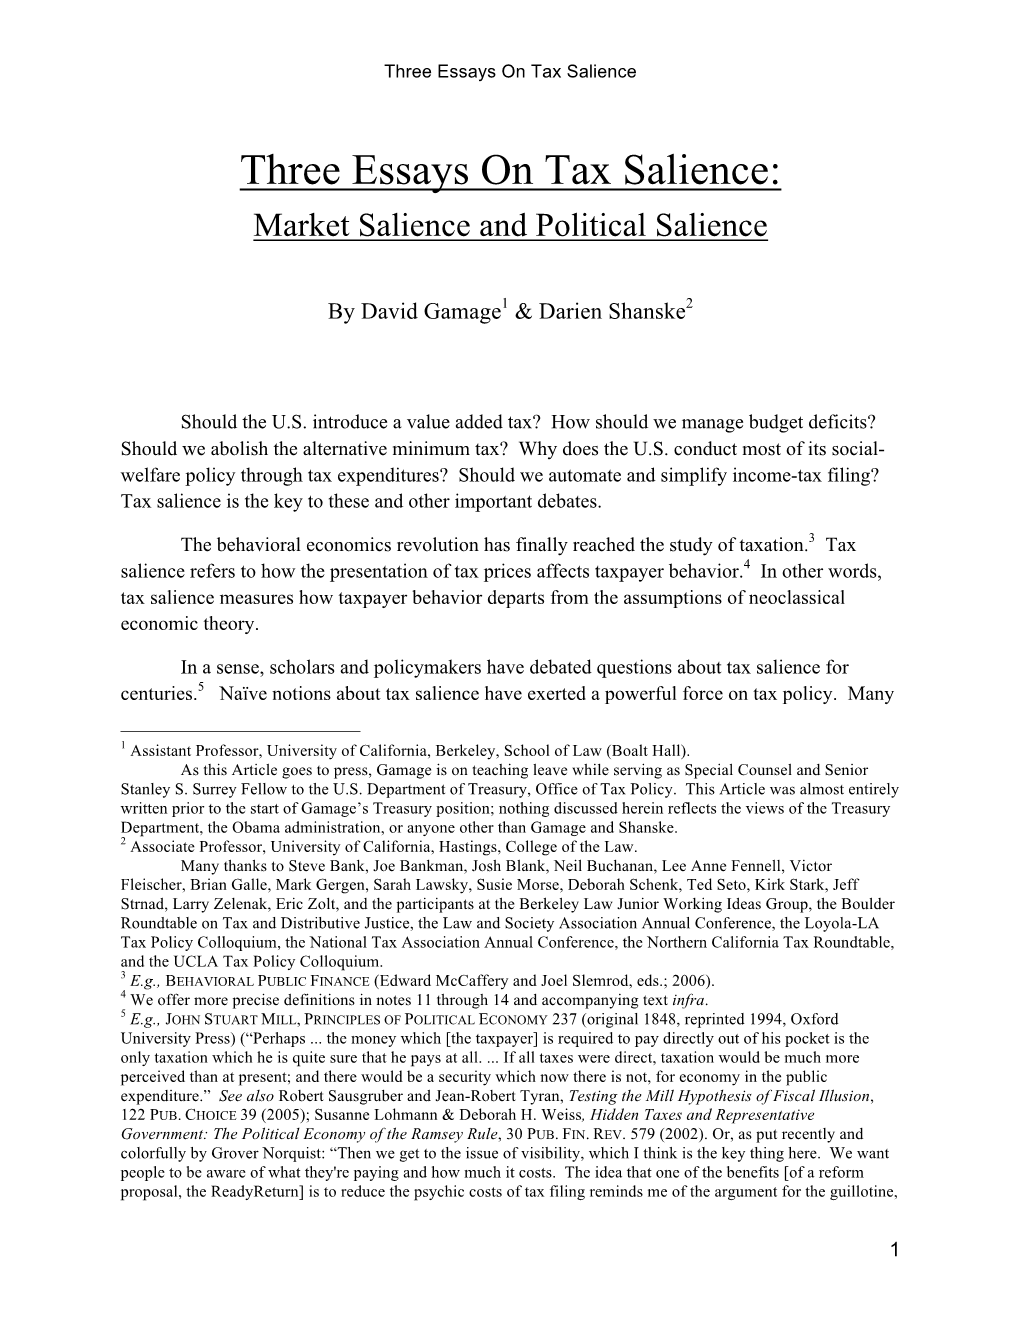 Three Essays on Tax Salience: Market Salience and Political